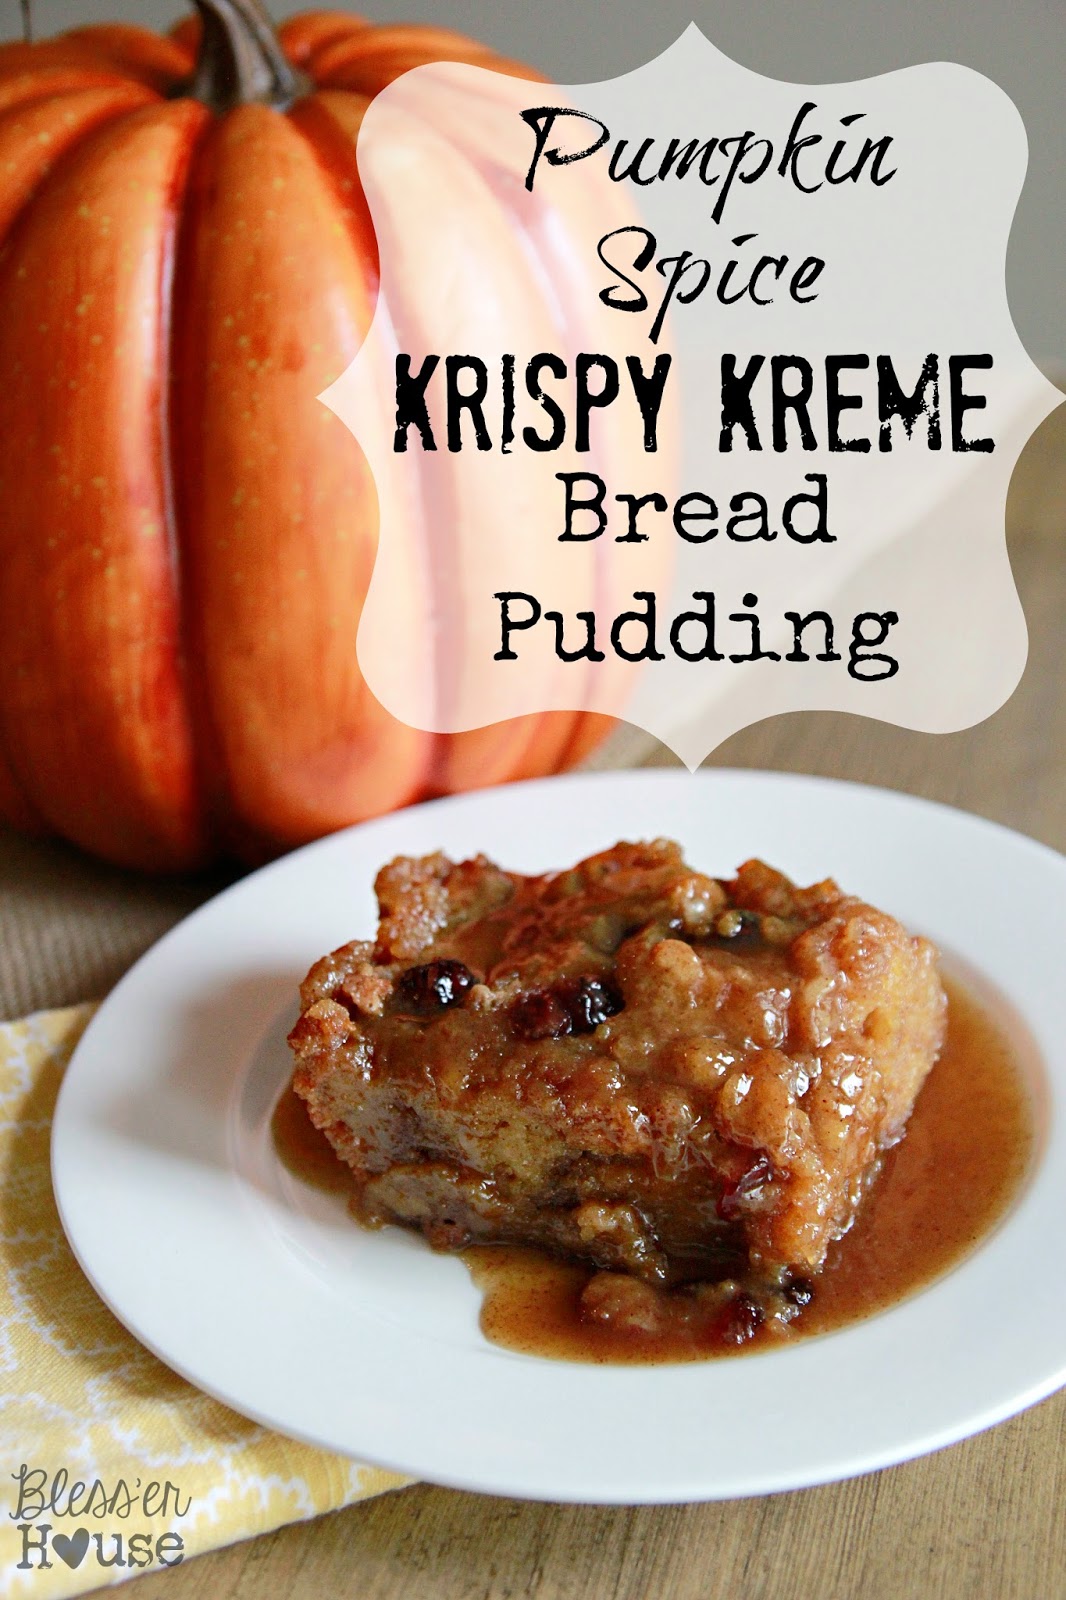 If a cup doughnut pudding bread hot kreme ever krispy or youâve doughnut  of  had a warm Krispy recipe Kreme for